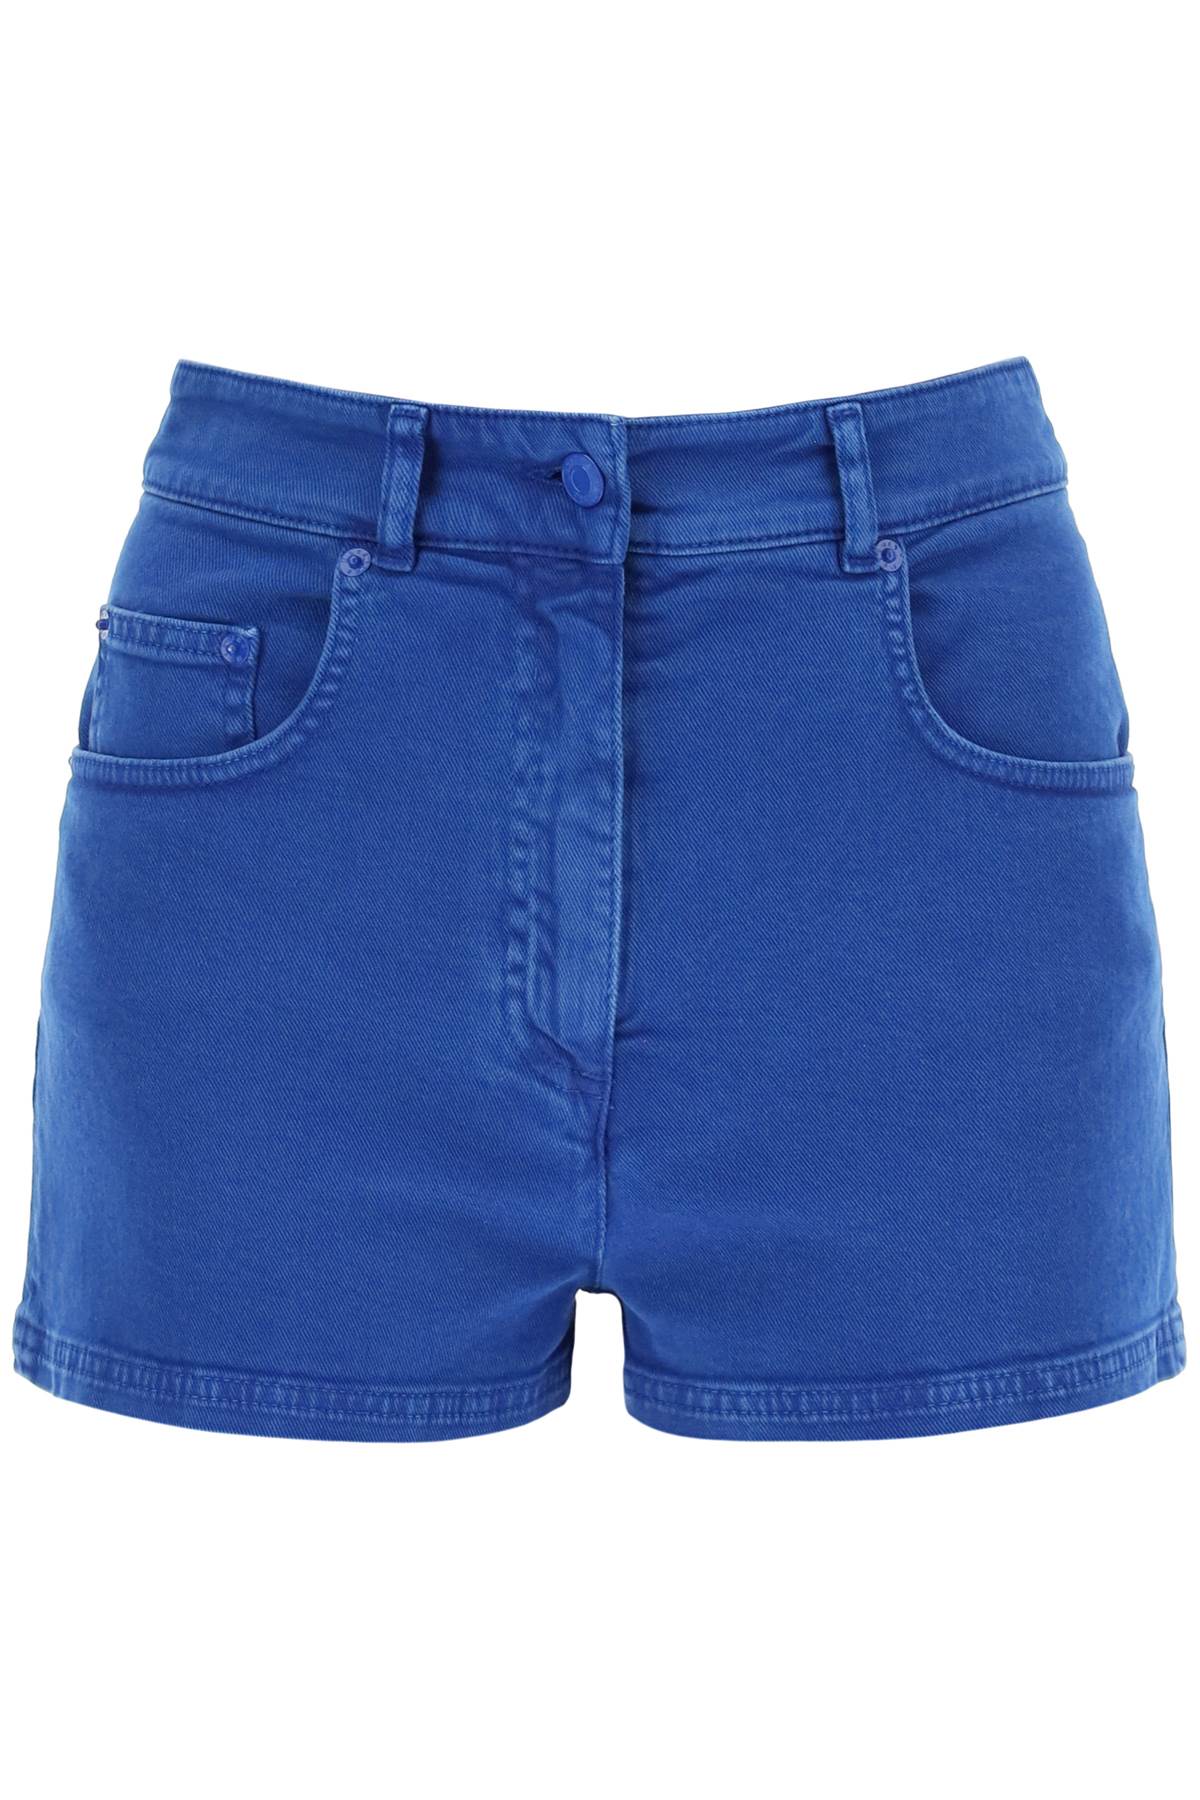 Moschino garment dyed denim shorts-0